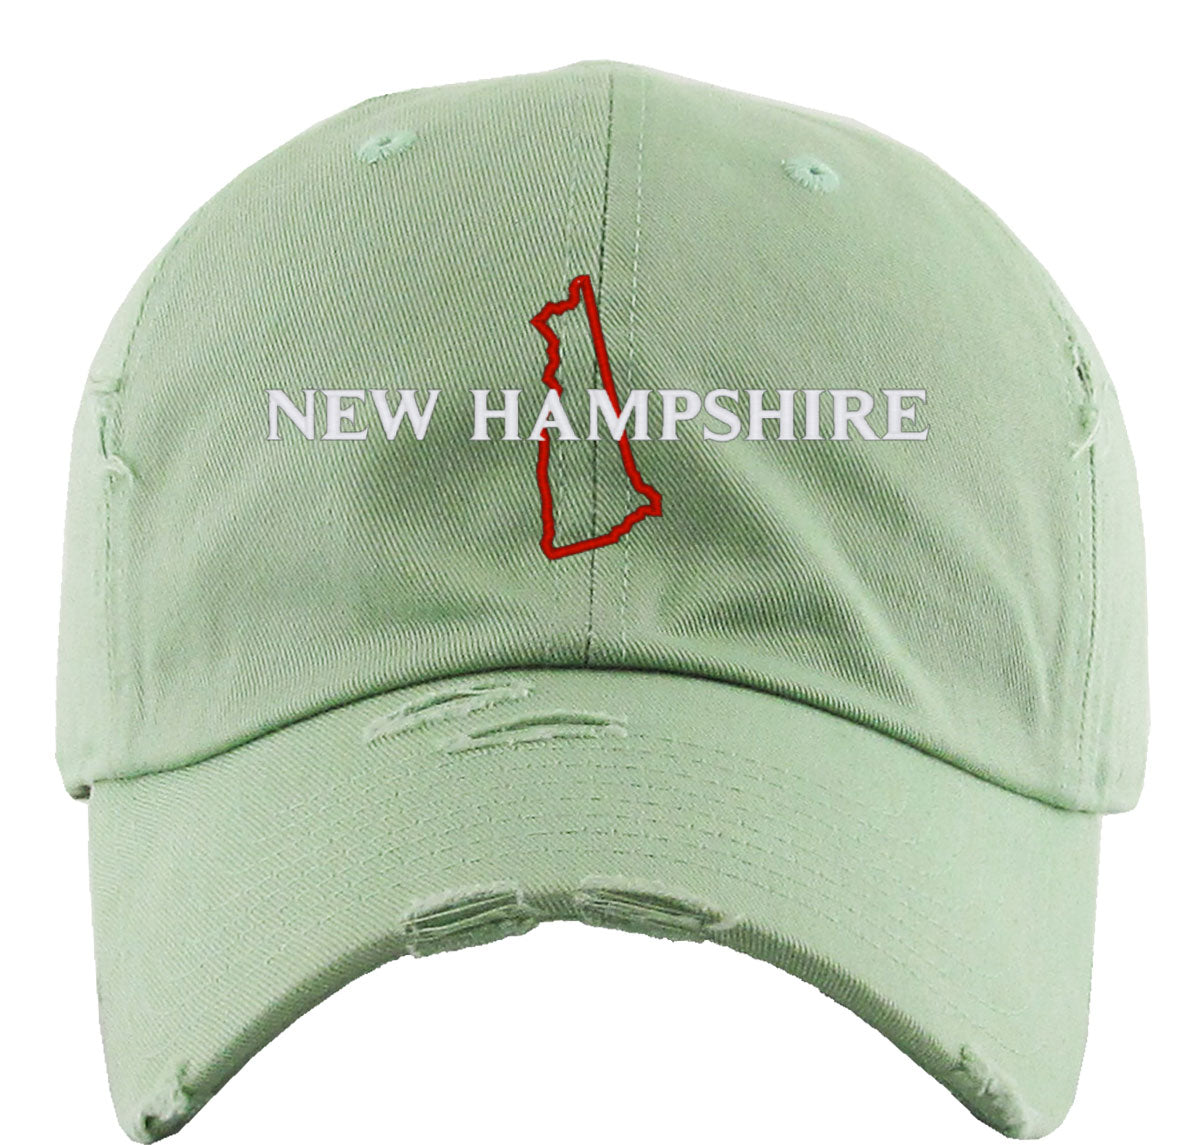 New Hampshire Vintage Baseball Cap